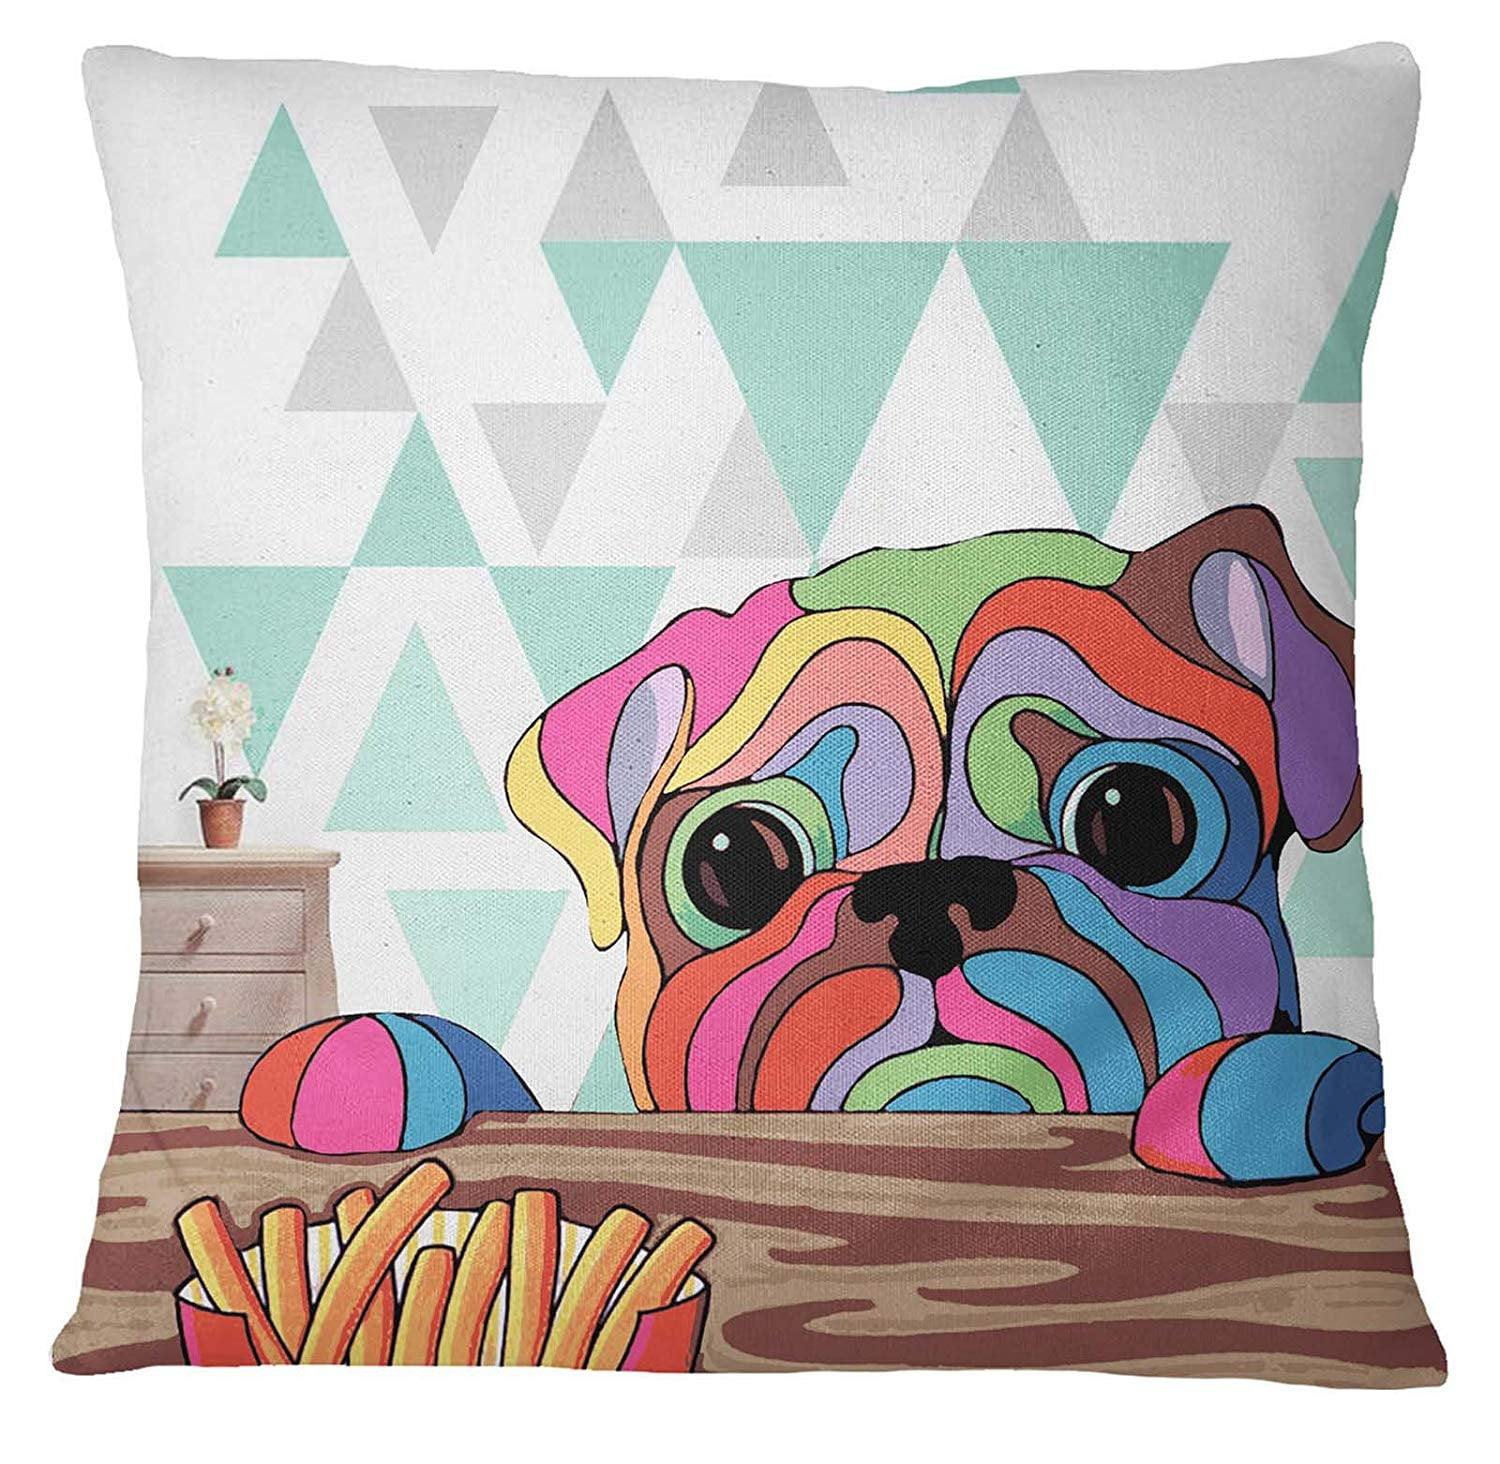 S4Sassy Pug Dog Print Decorative Multicolor Square Cushion Cover Pillow Case 